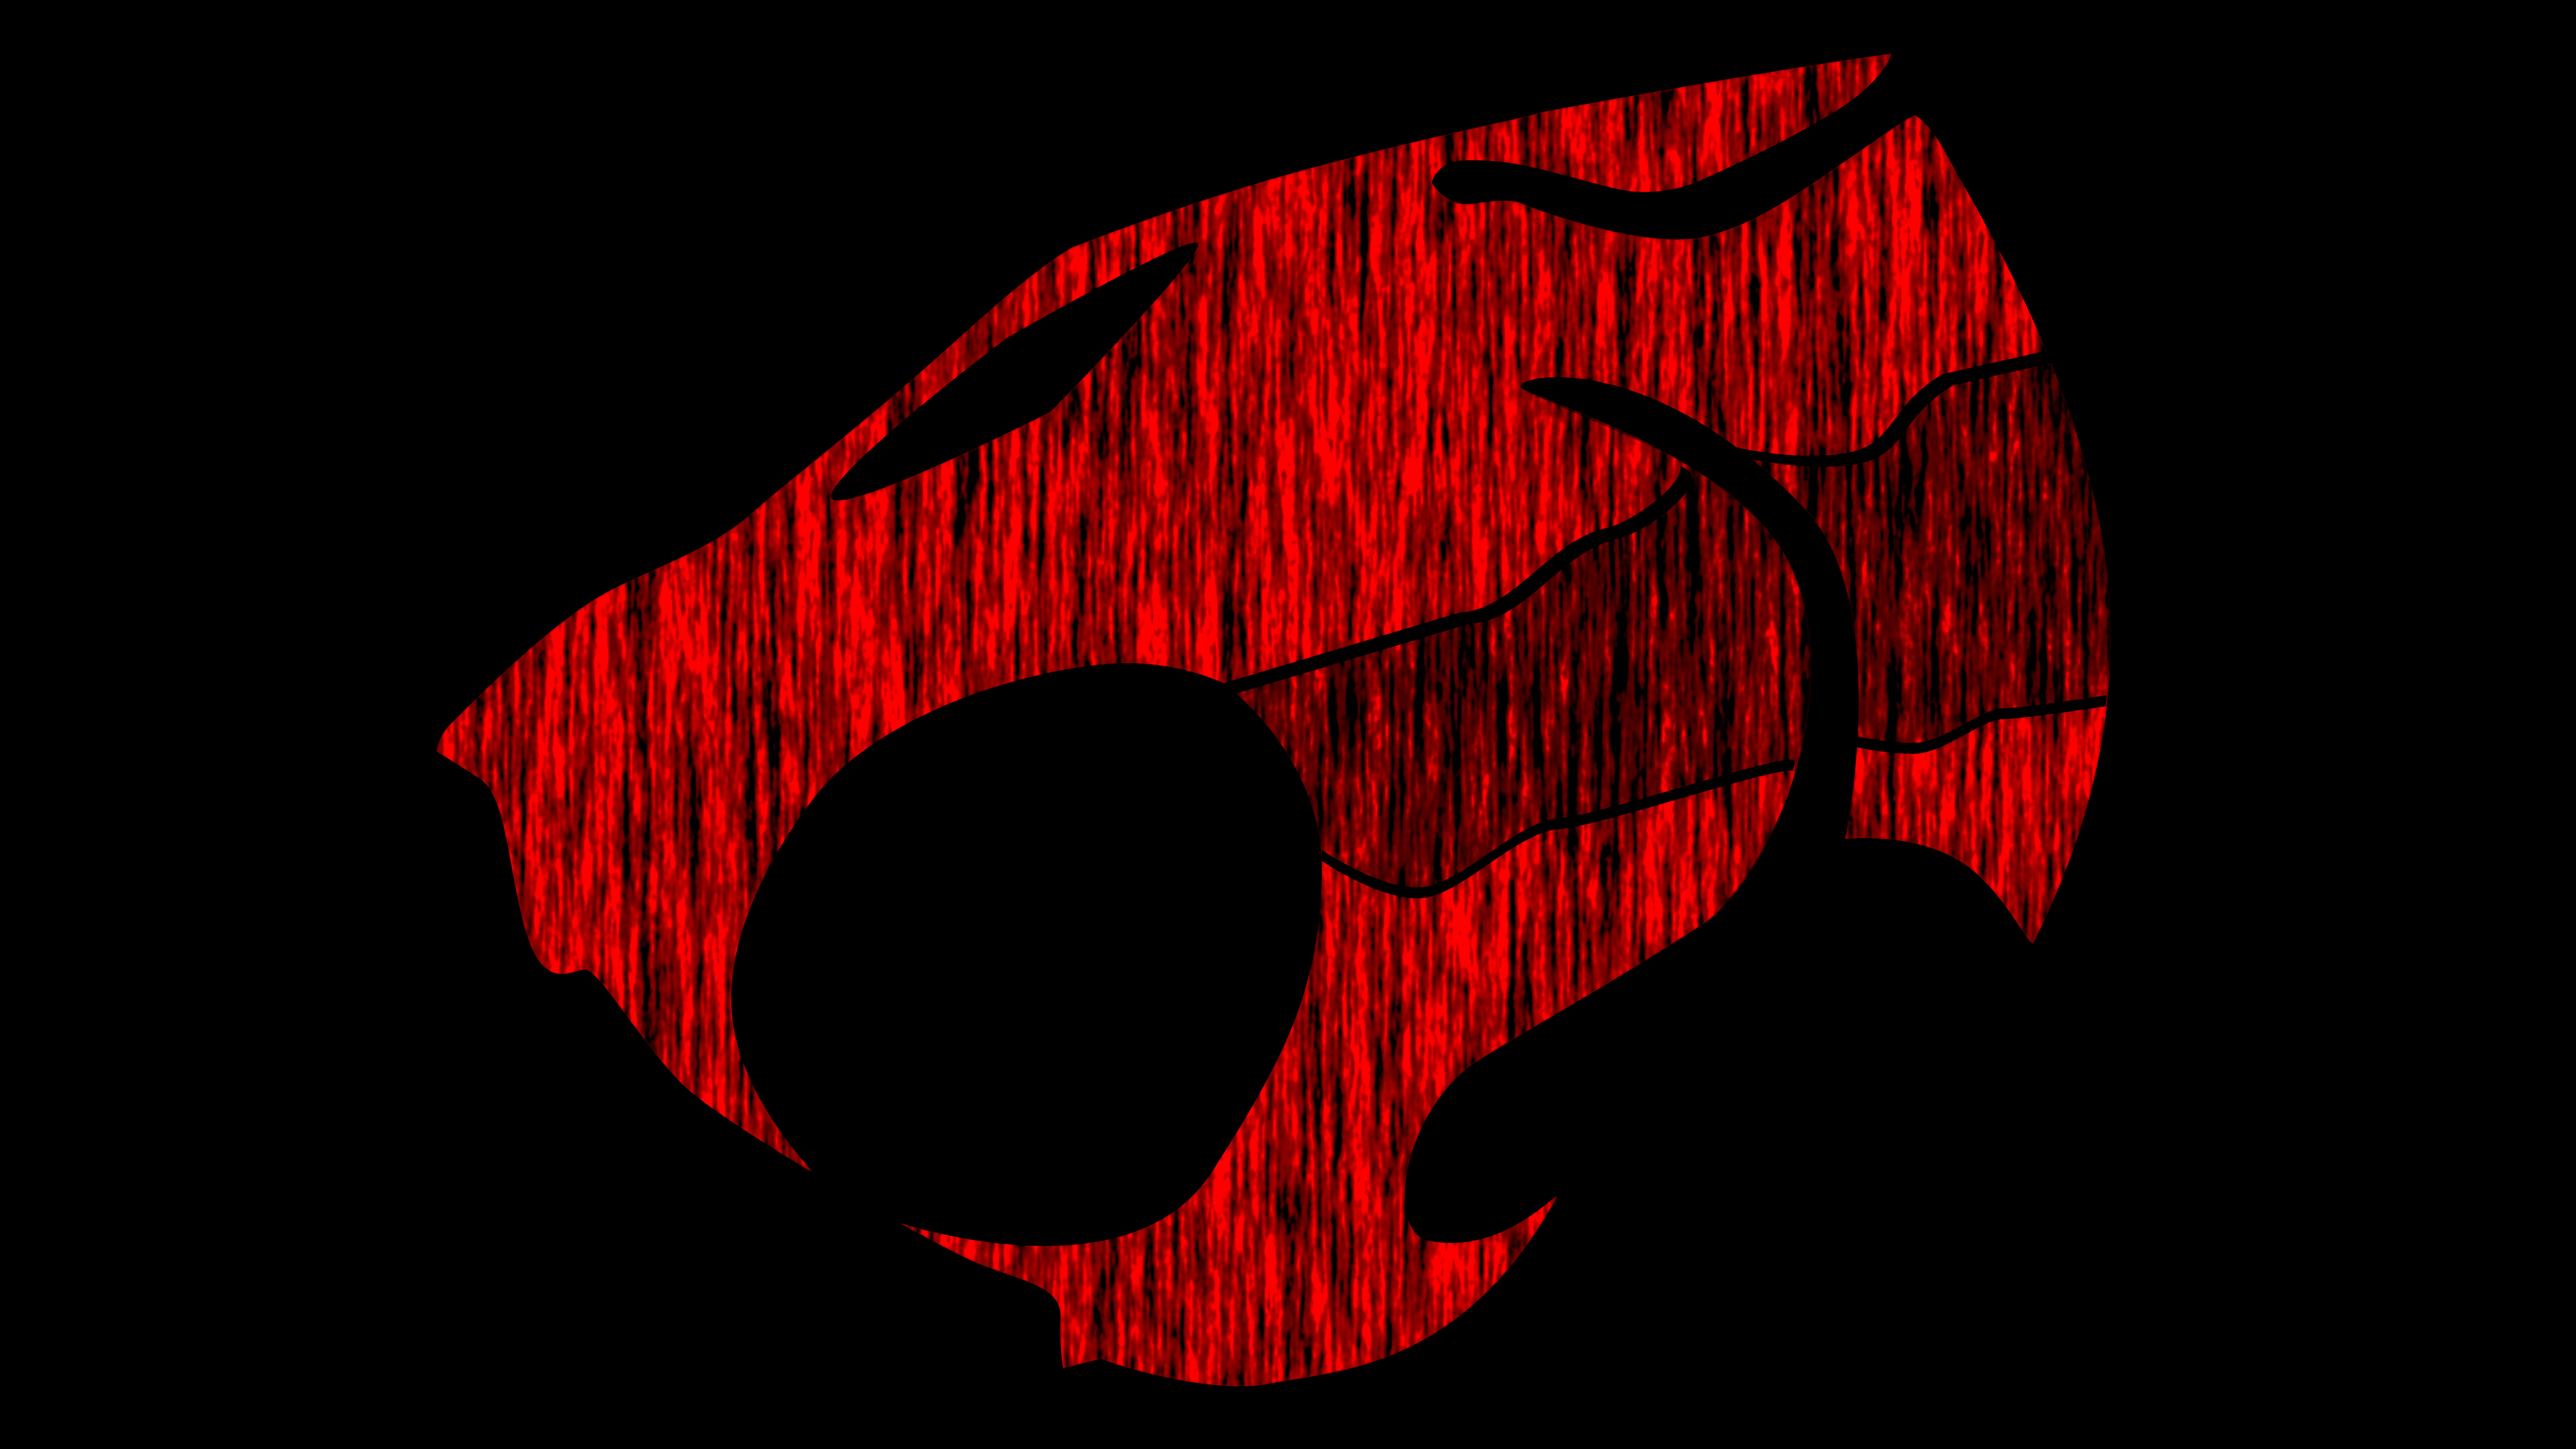 thundercats logo wallpaper